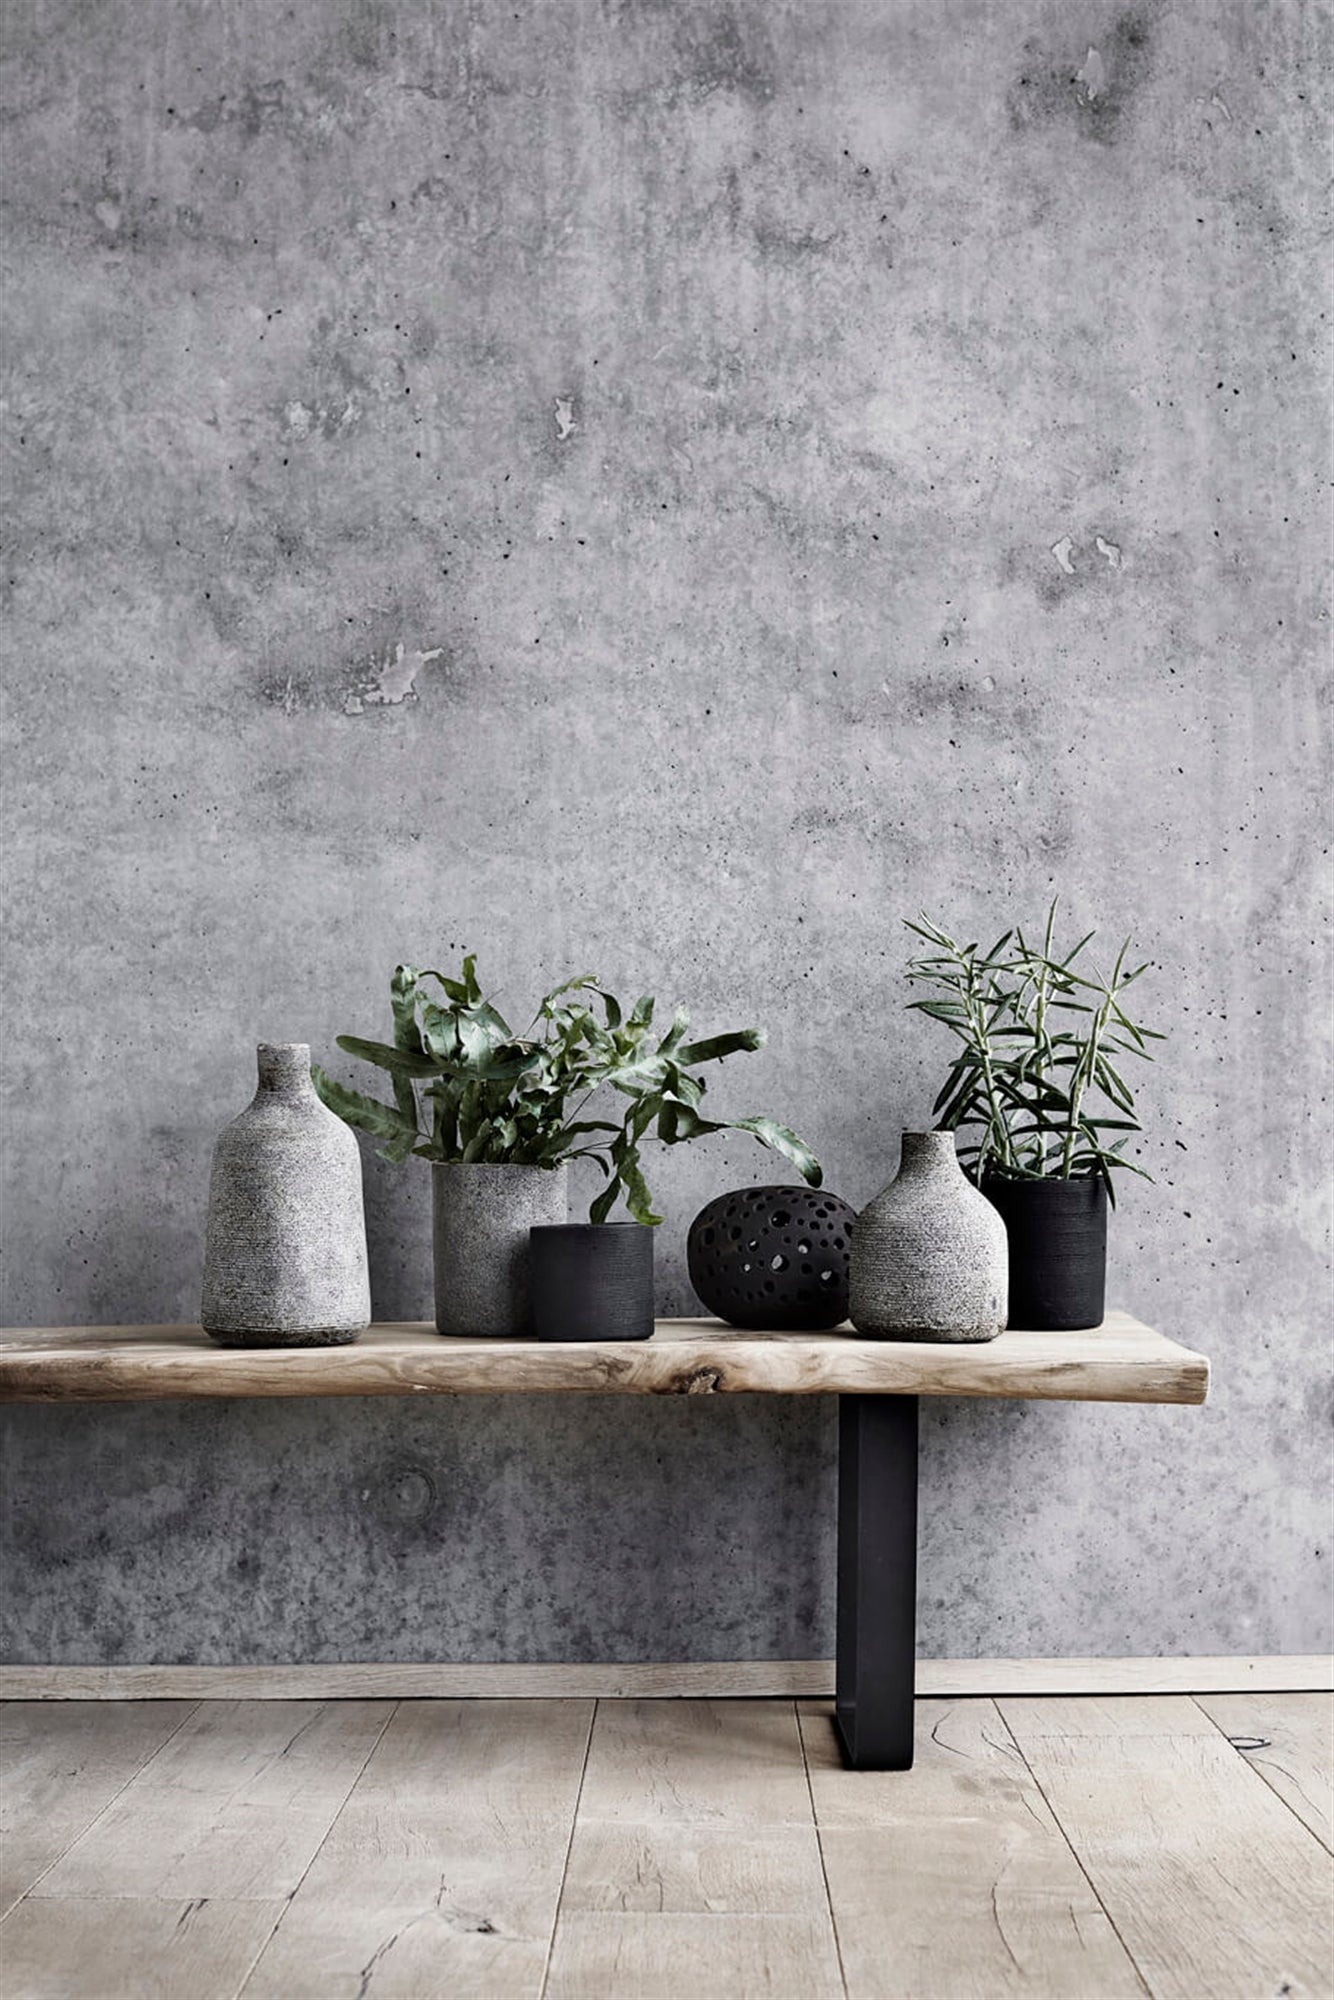 Ridged Vase in Grey/Brown - Small